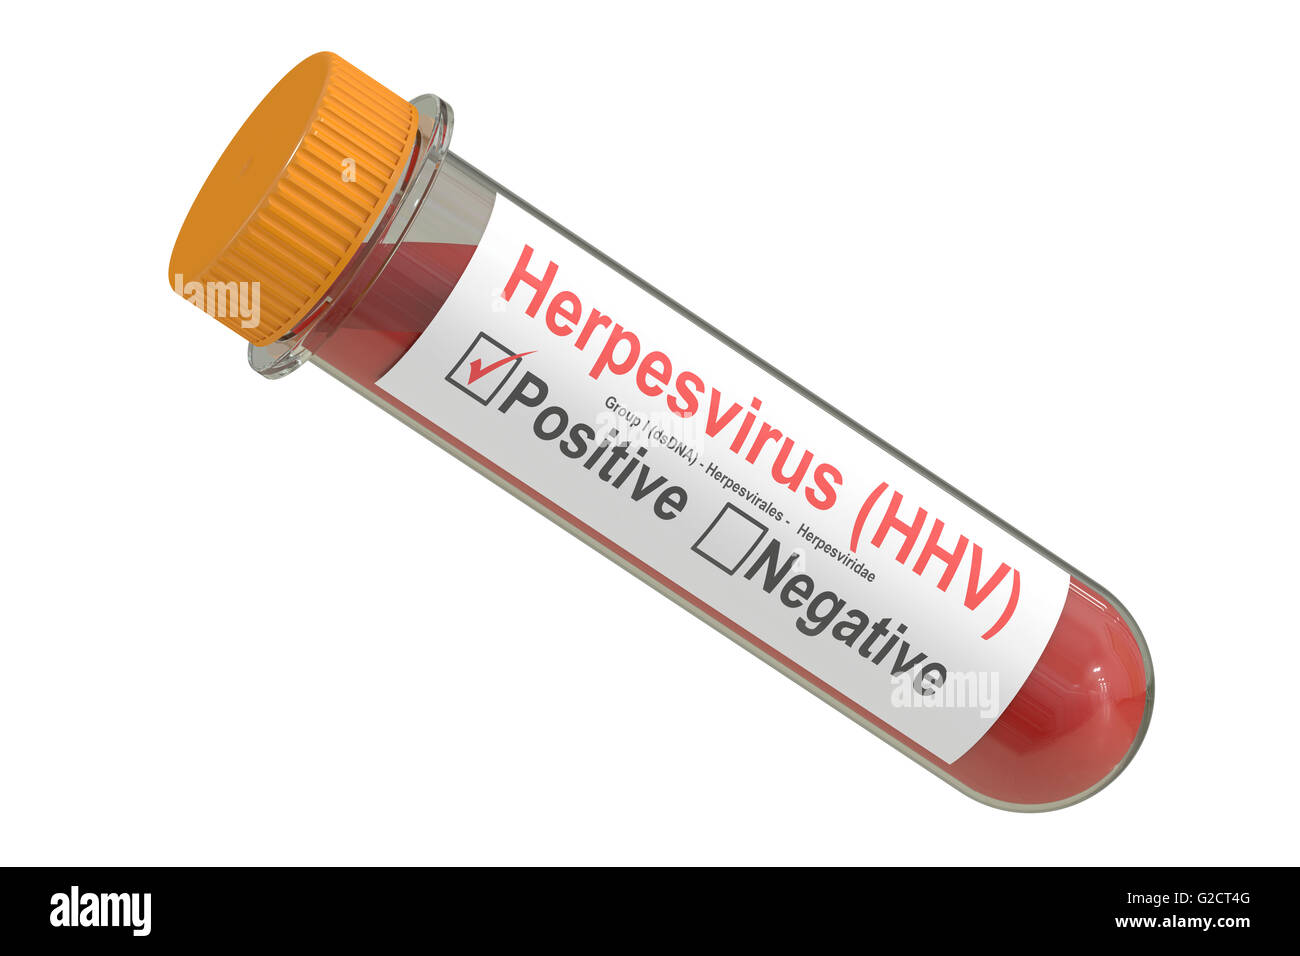 Test tube with blood sample positive with herpesvirus hhv virus, 3D rendering Stock Photo